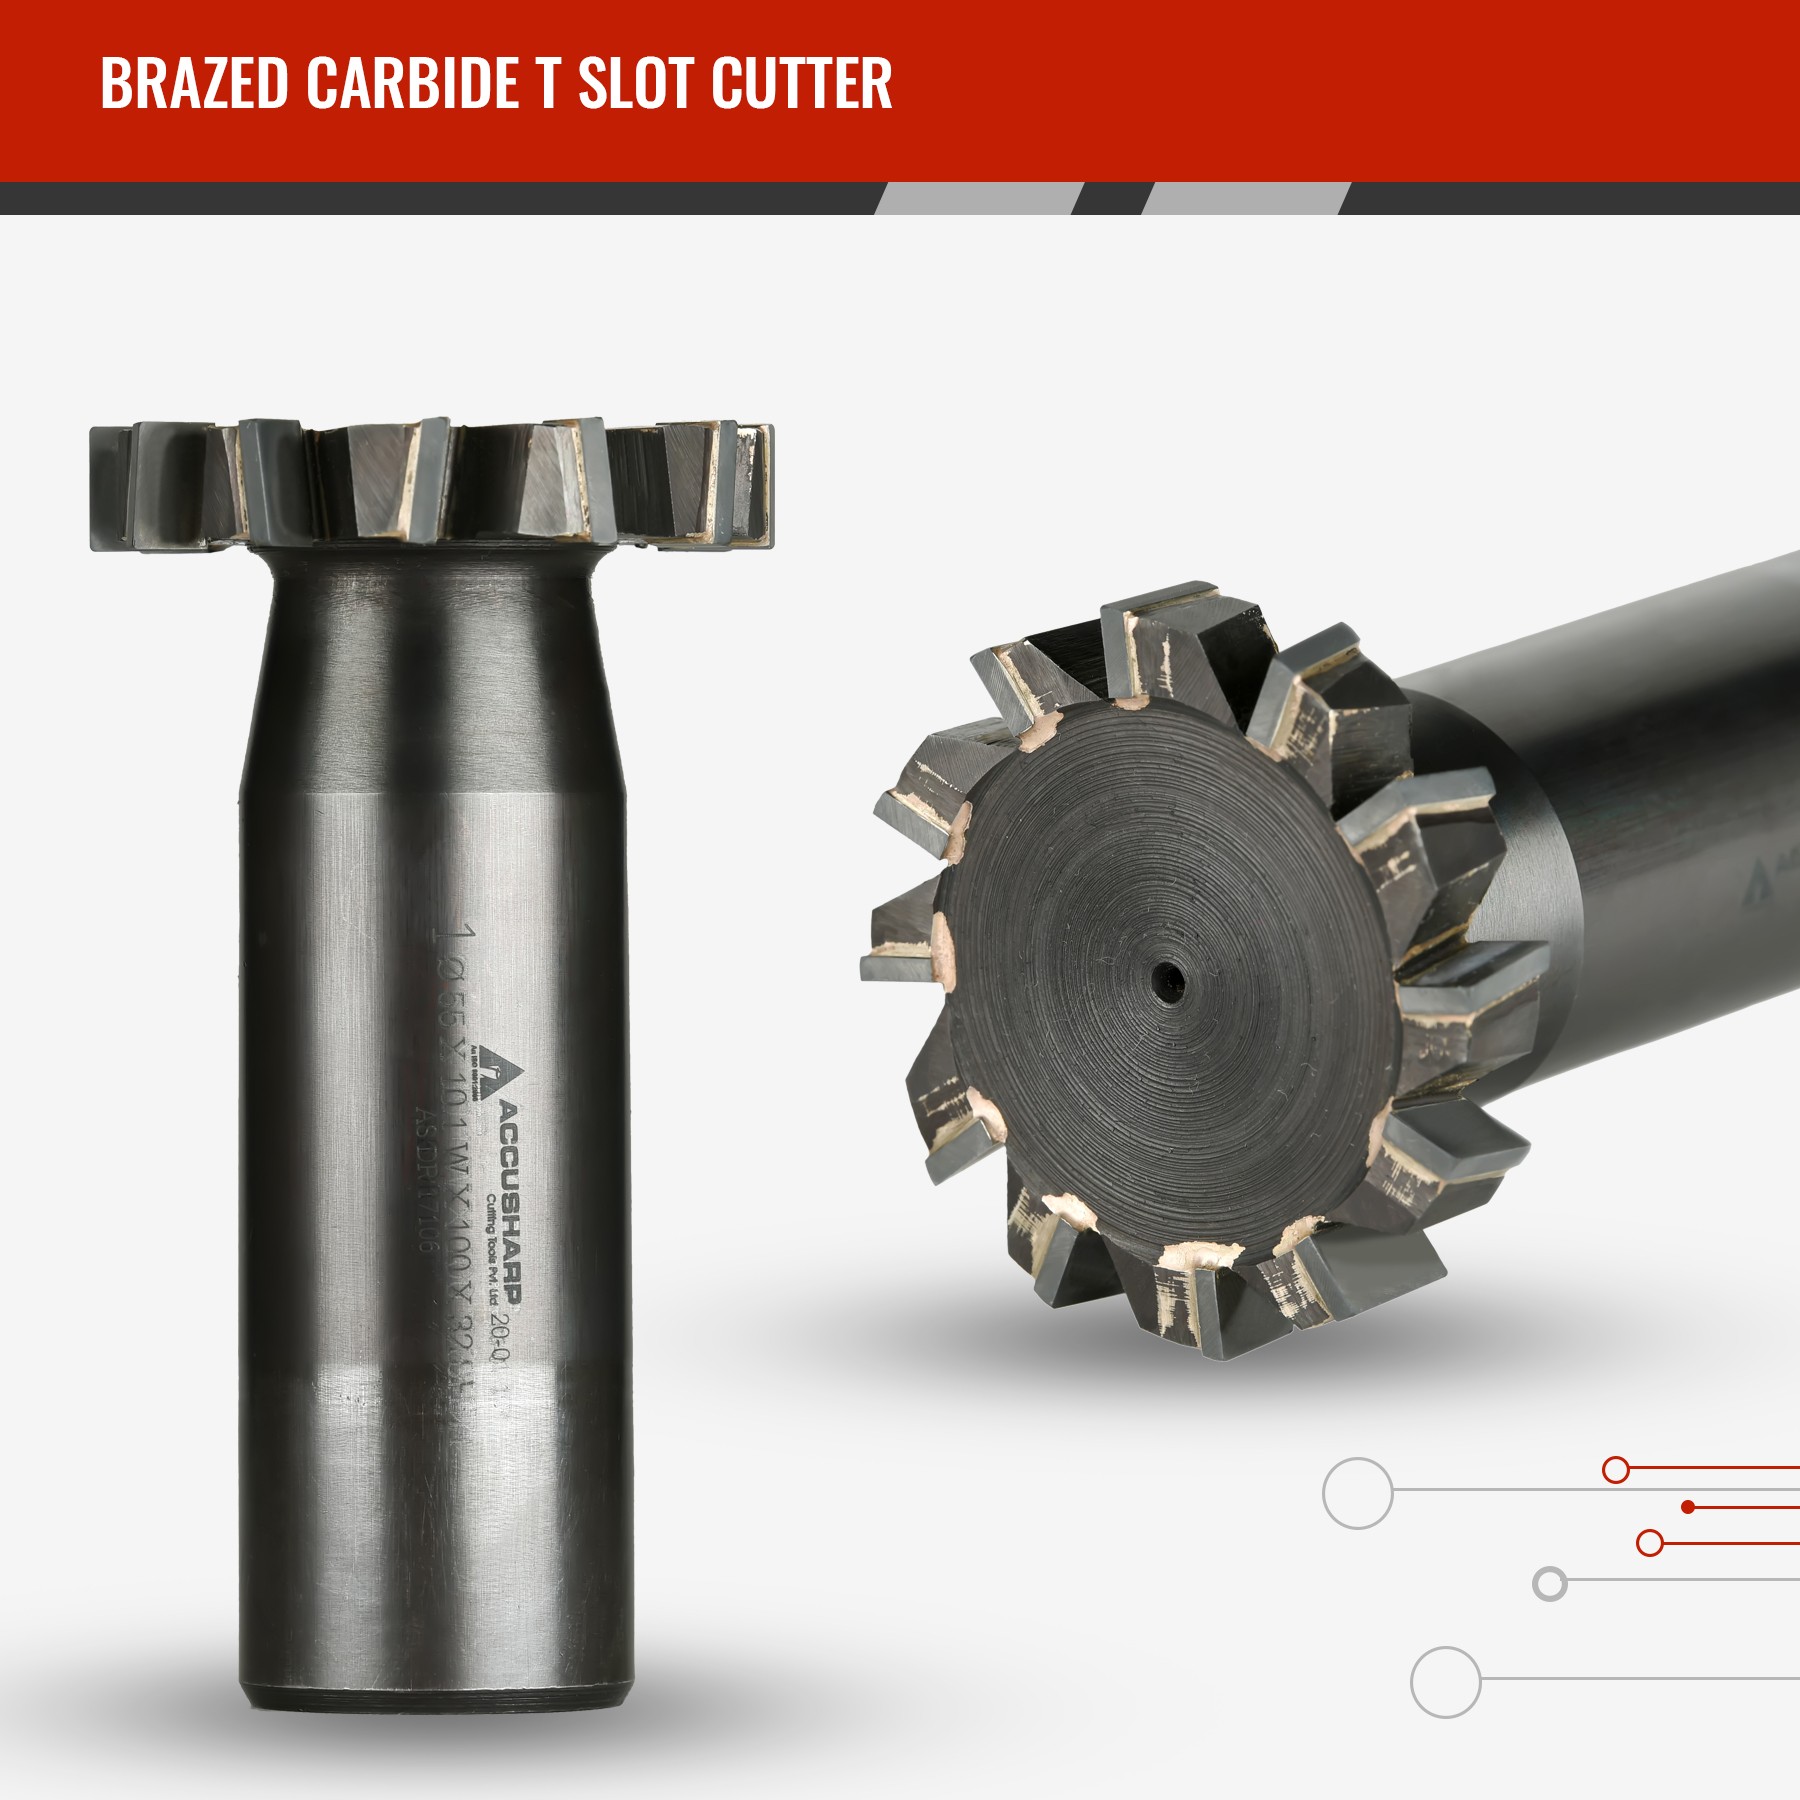 Brazed carbide T slot cutter